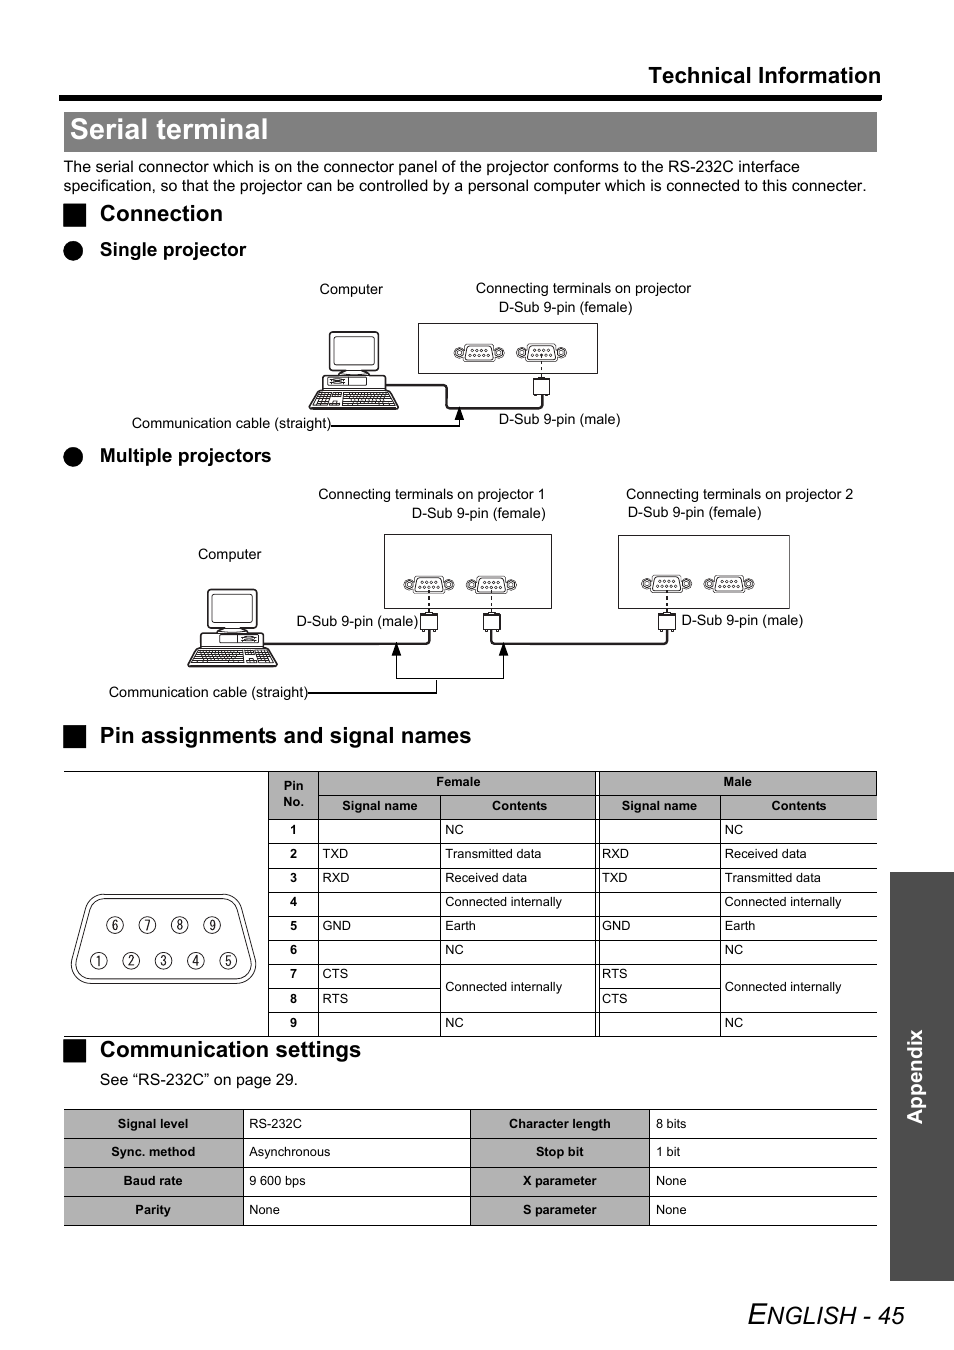 Serial terminal, Nglish - 45, Technical information | Panasonic PT